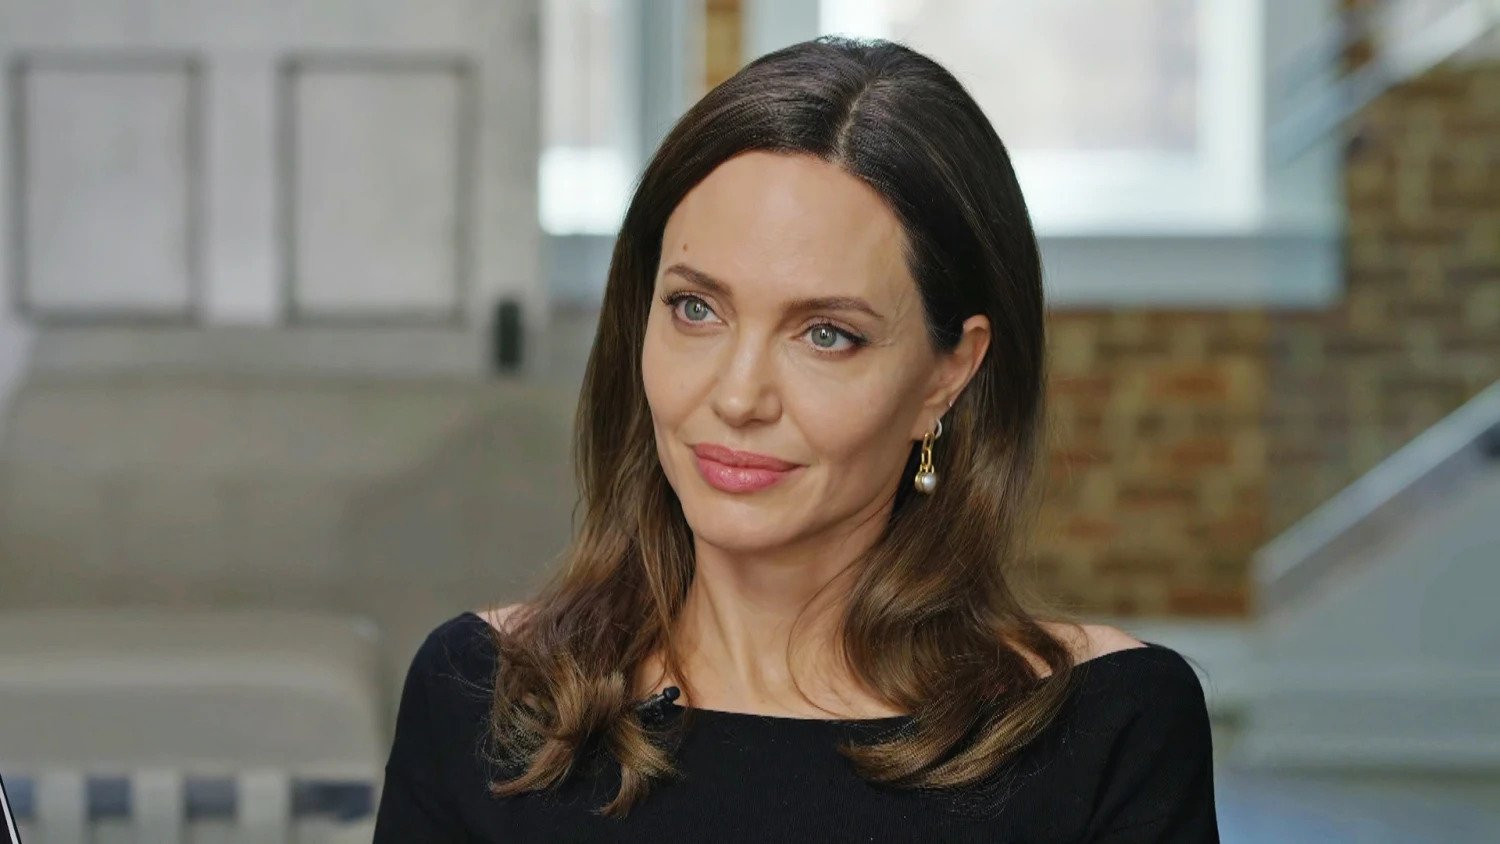 Angelina Jolie condemns Gaza attacks, urges immediate cease-fire